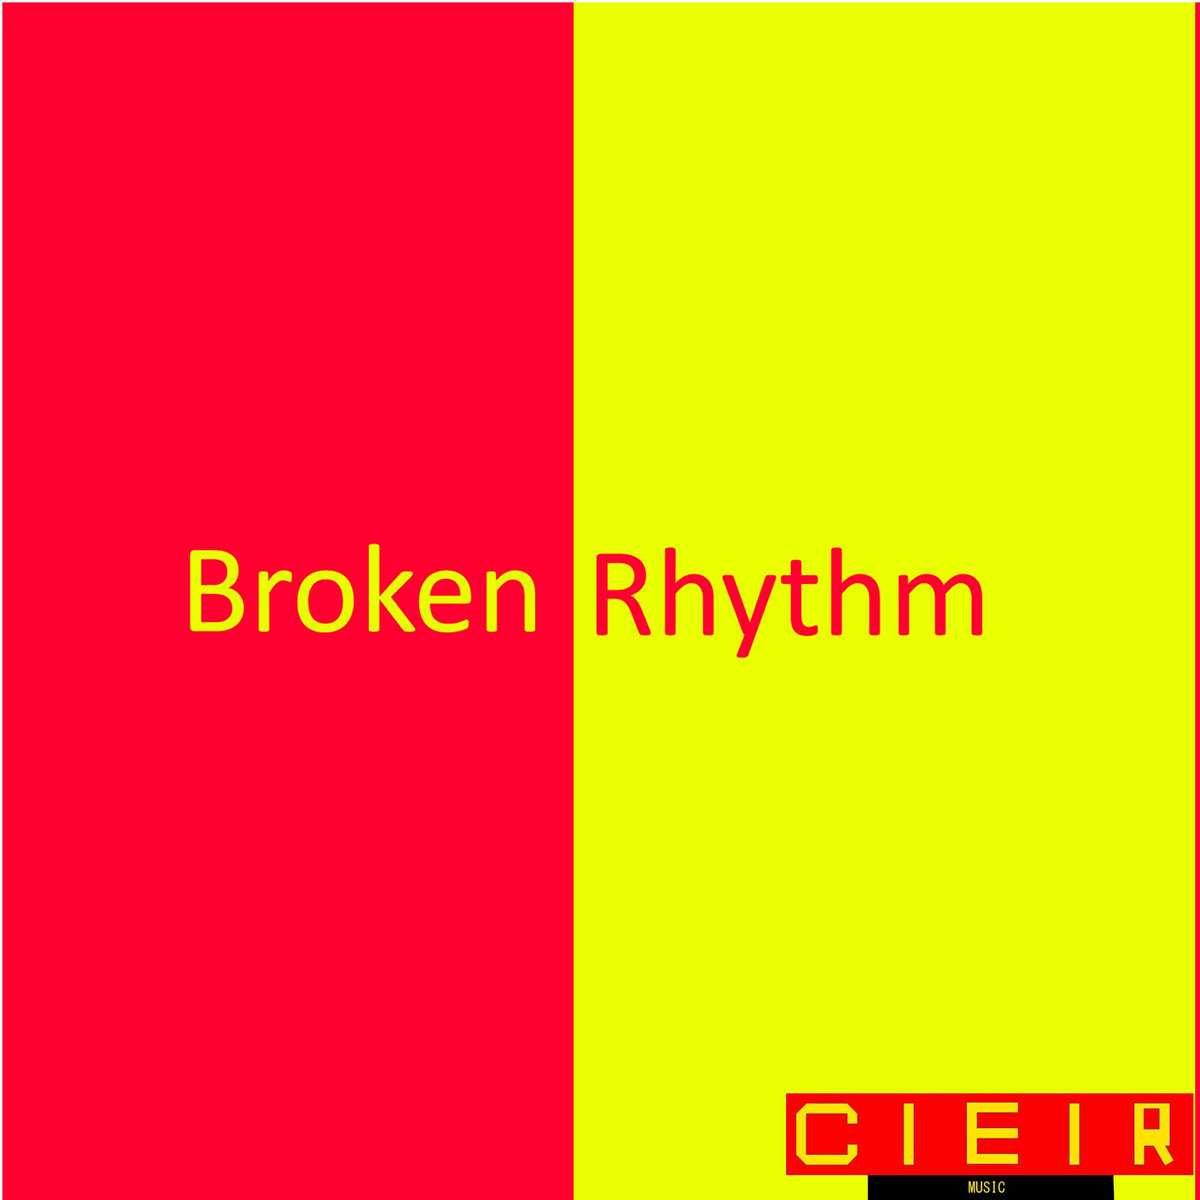 https://shanethemusician.bandcamp.com/track/broken-rhythm